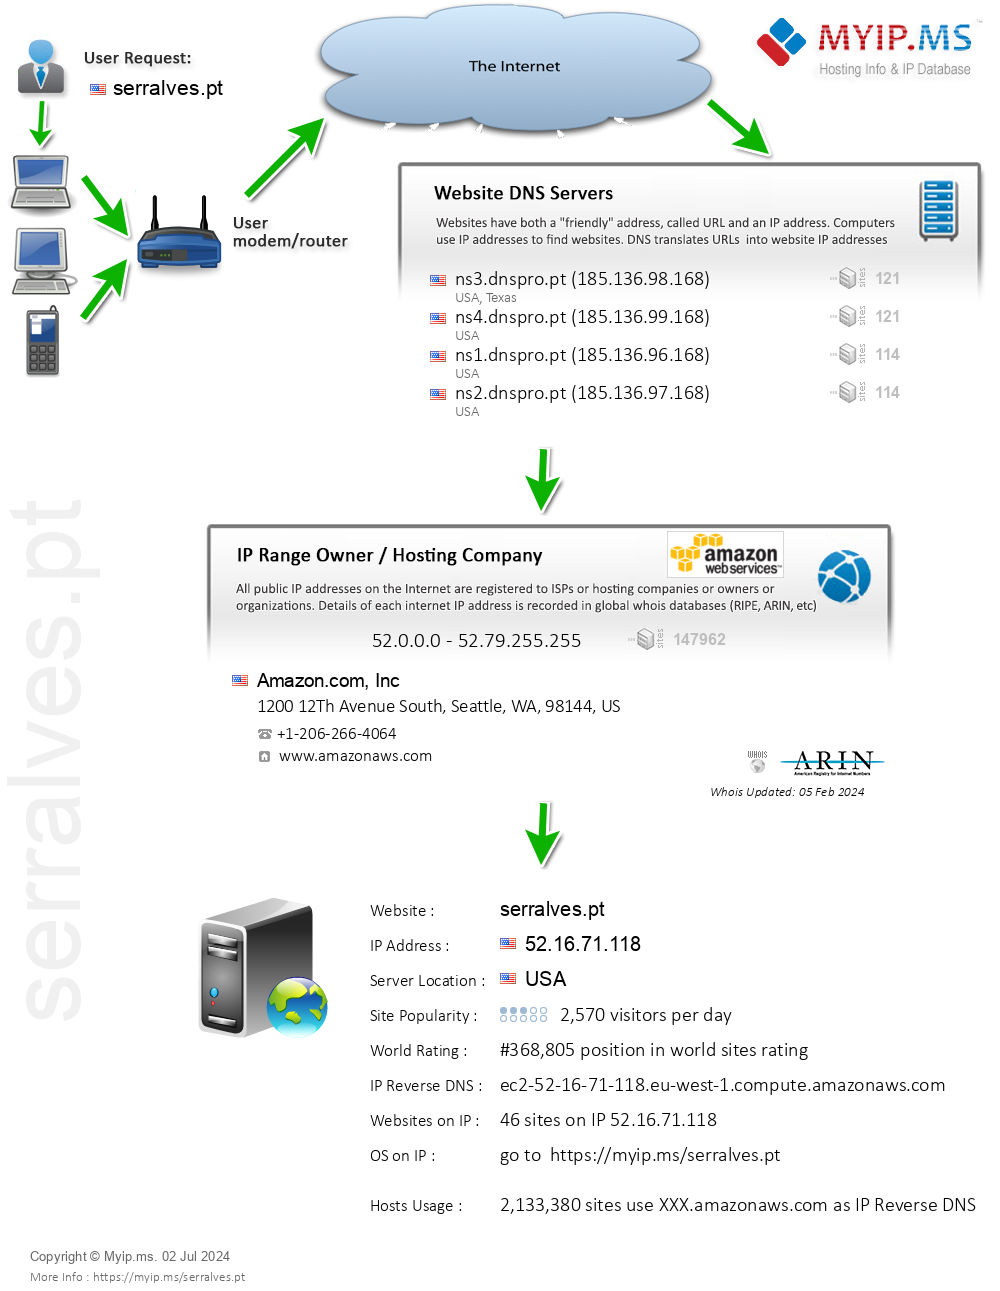 Serralves.pt - Website Hosting Visual IP Diagram